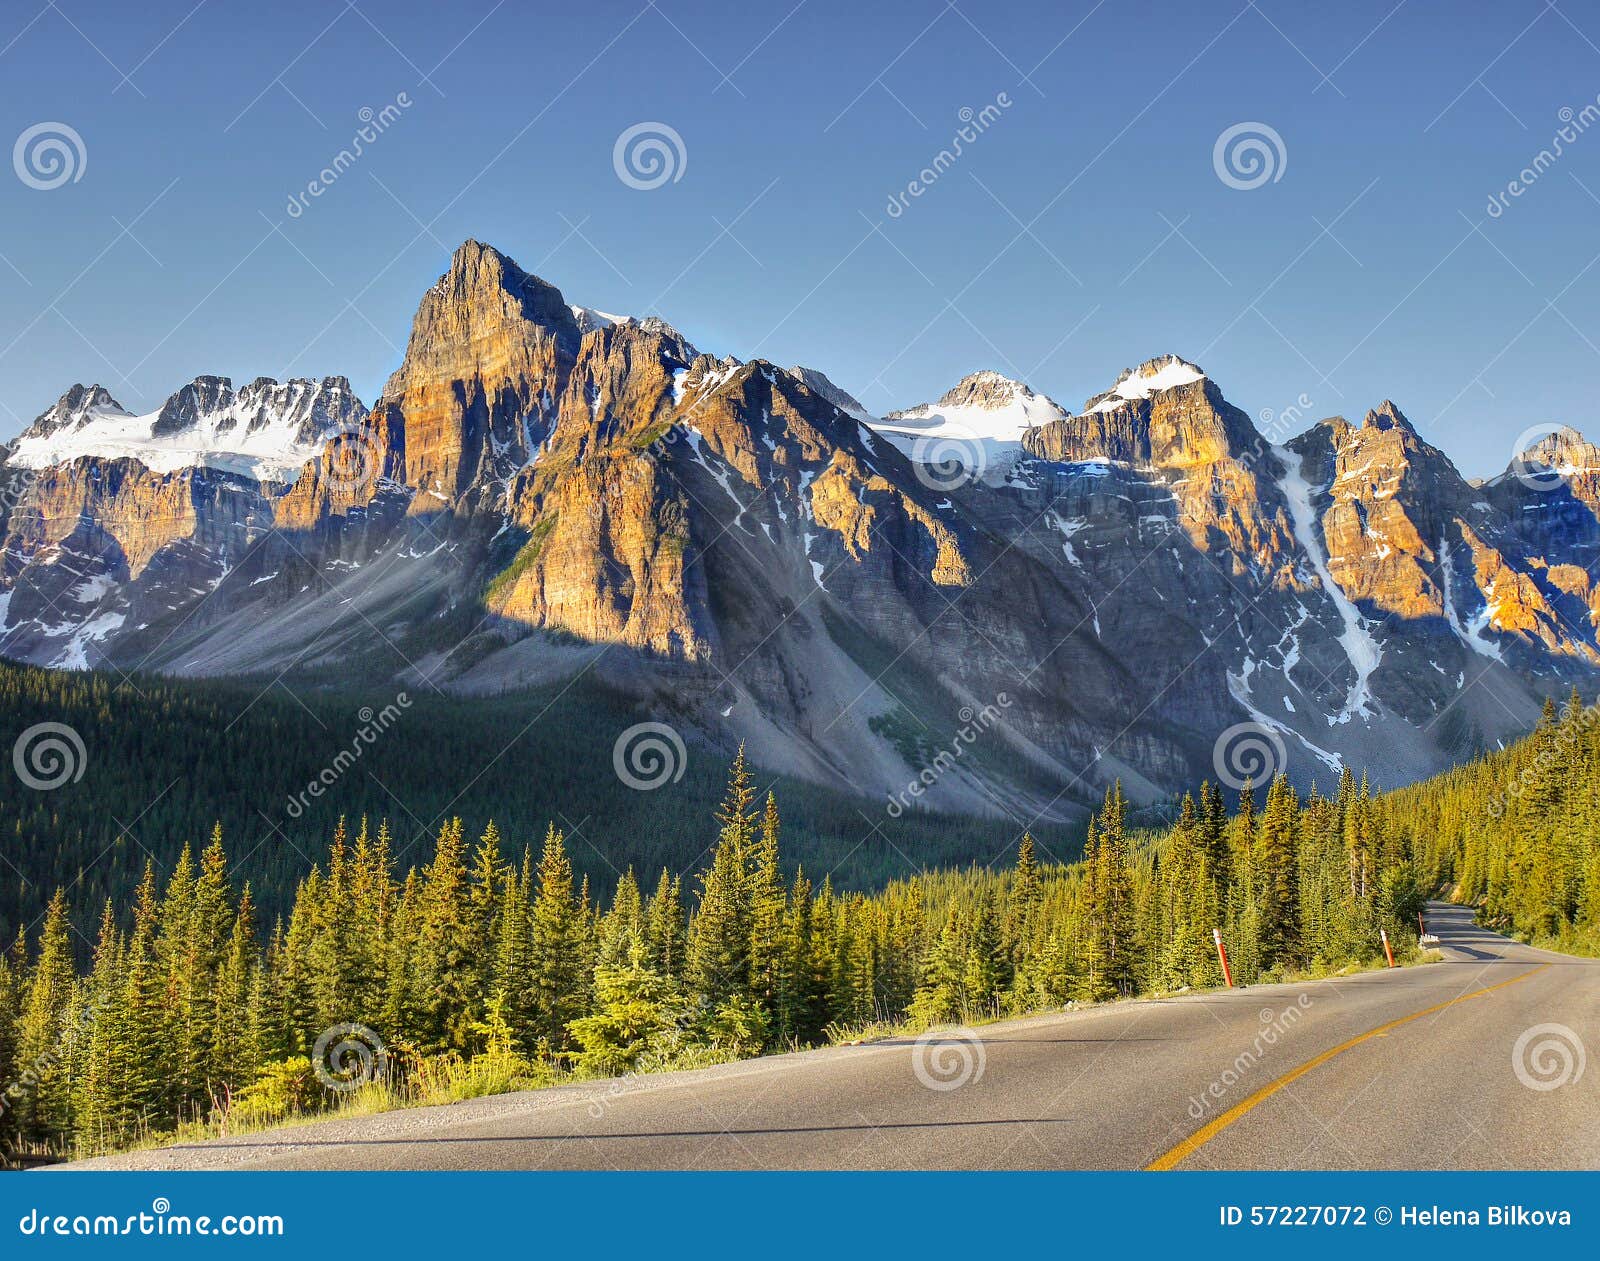 sunrise at rocky mountains, banff np, alberta, canada